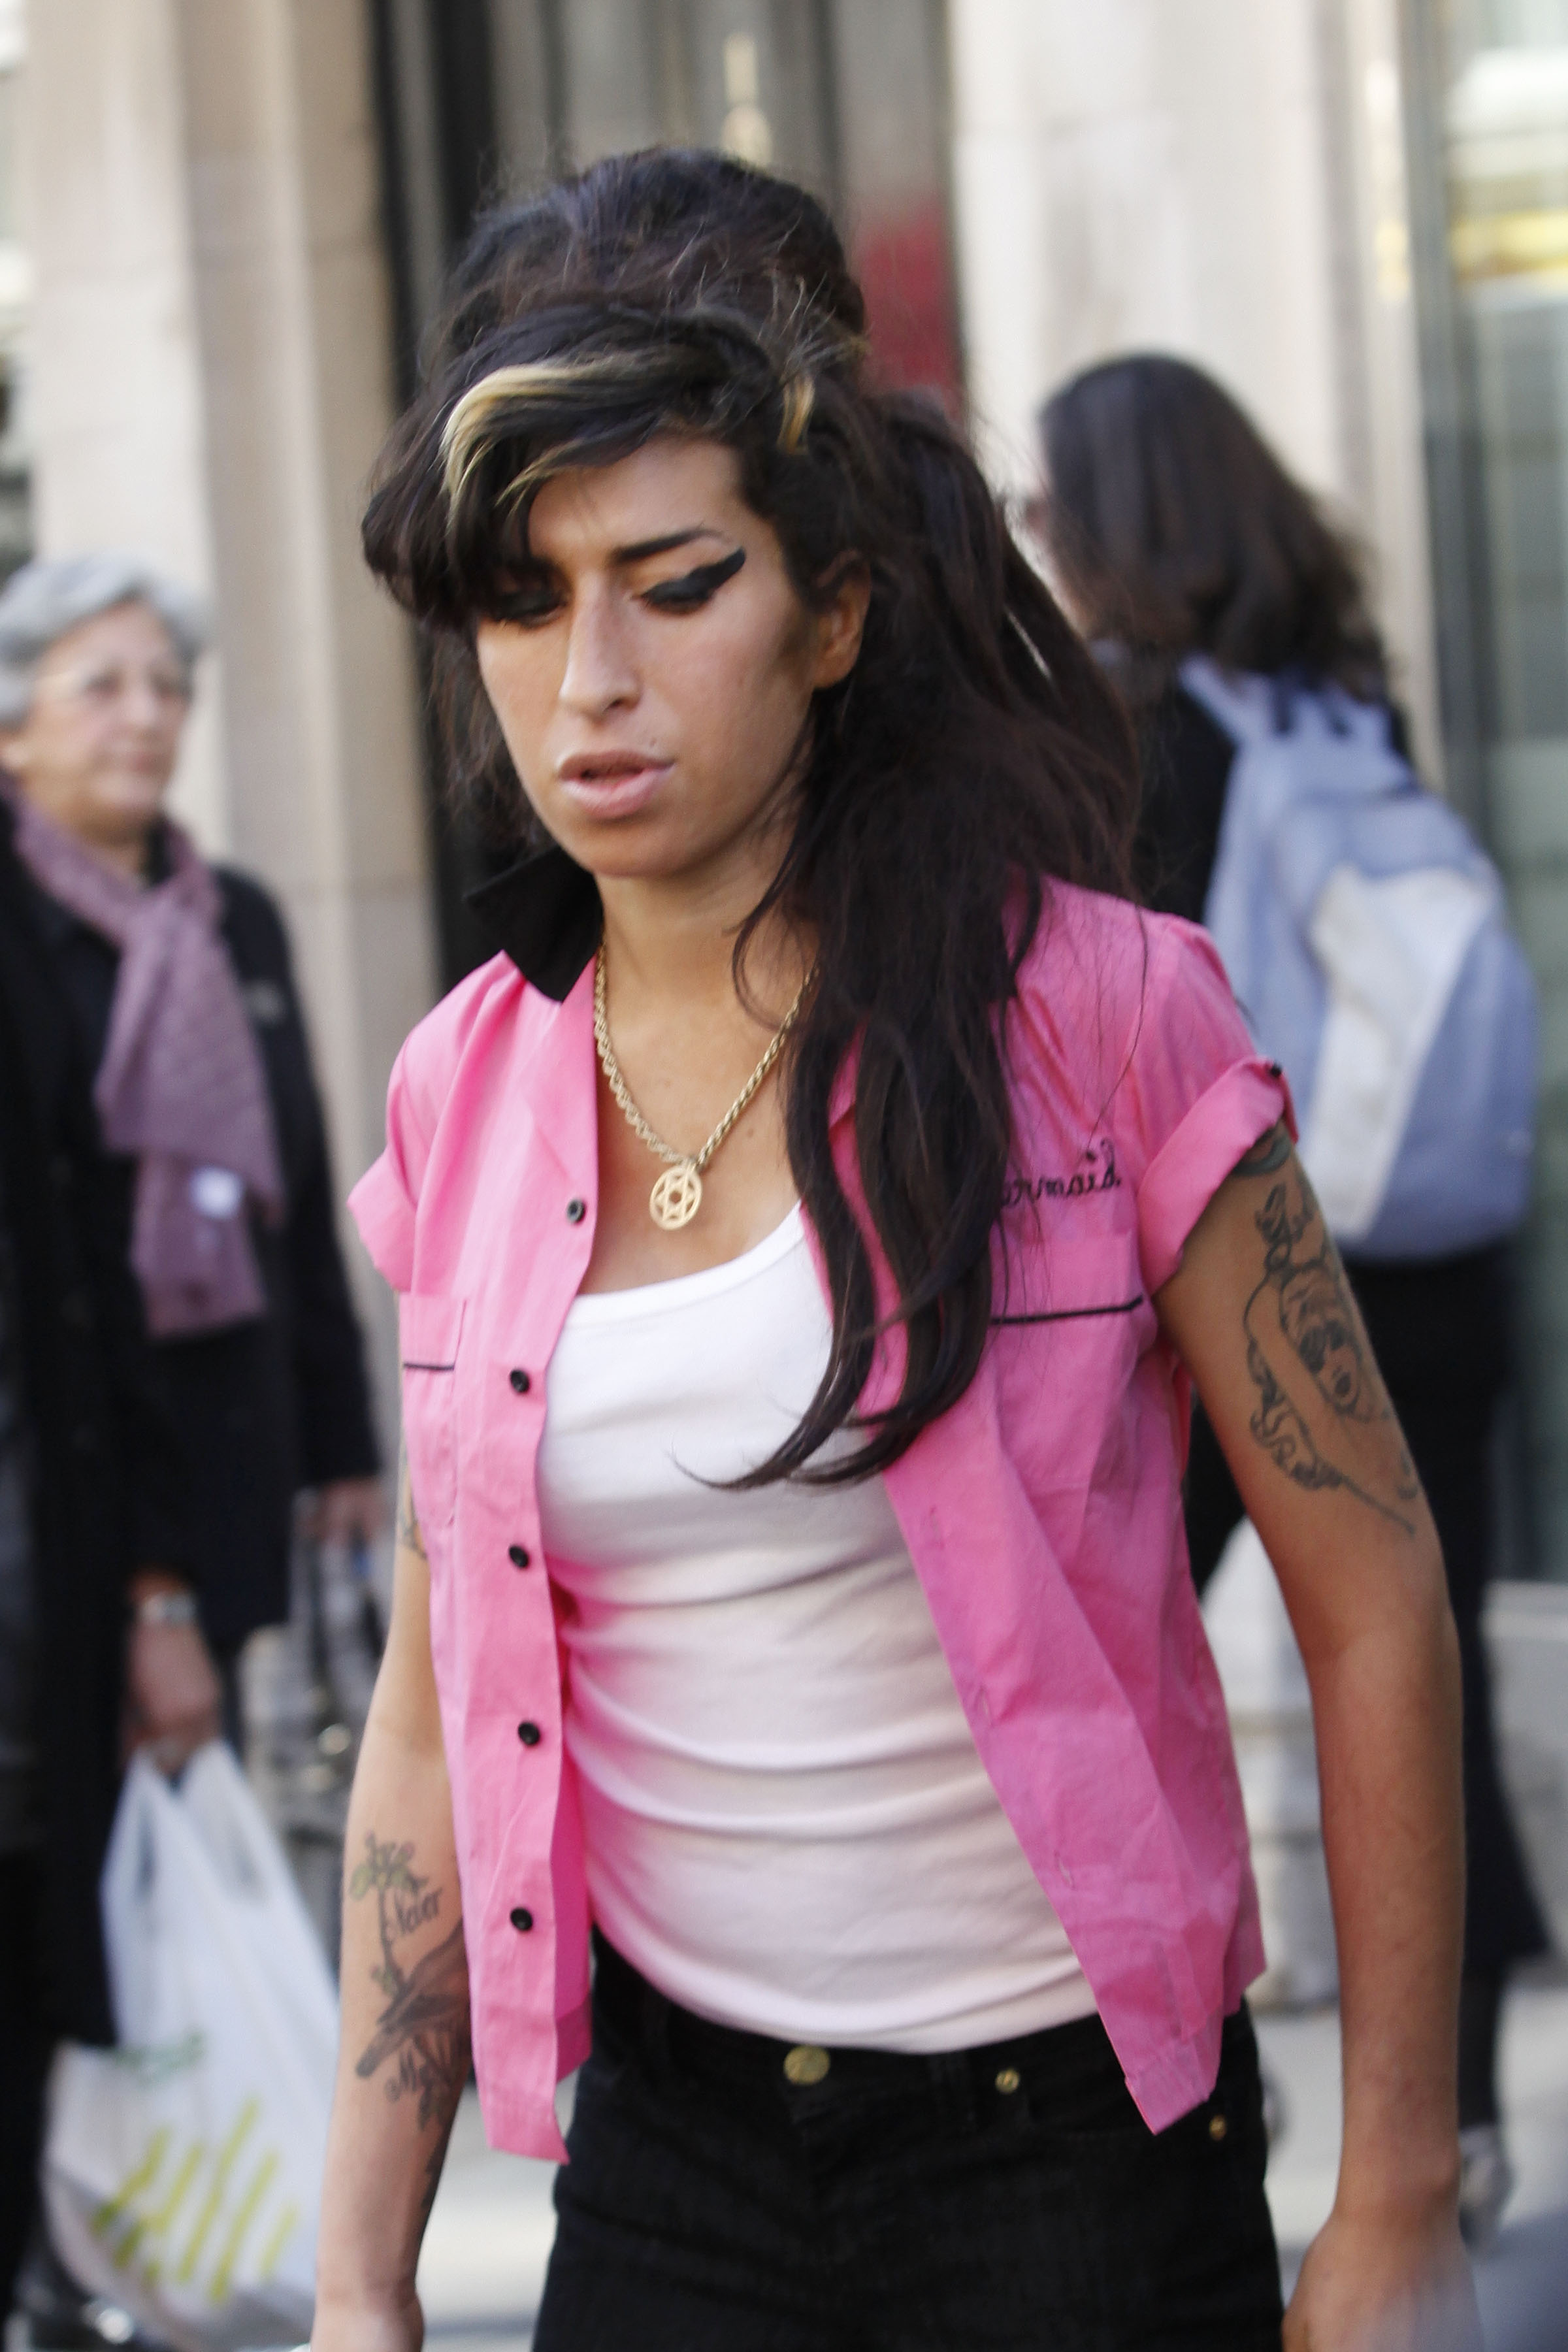 Amy Winehouse, Blake Fielder-Civil